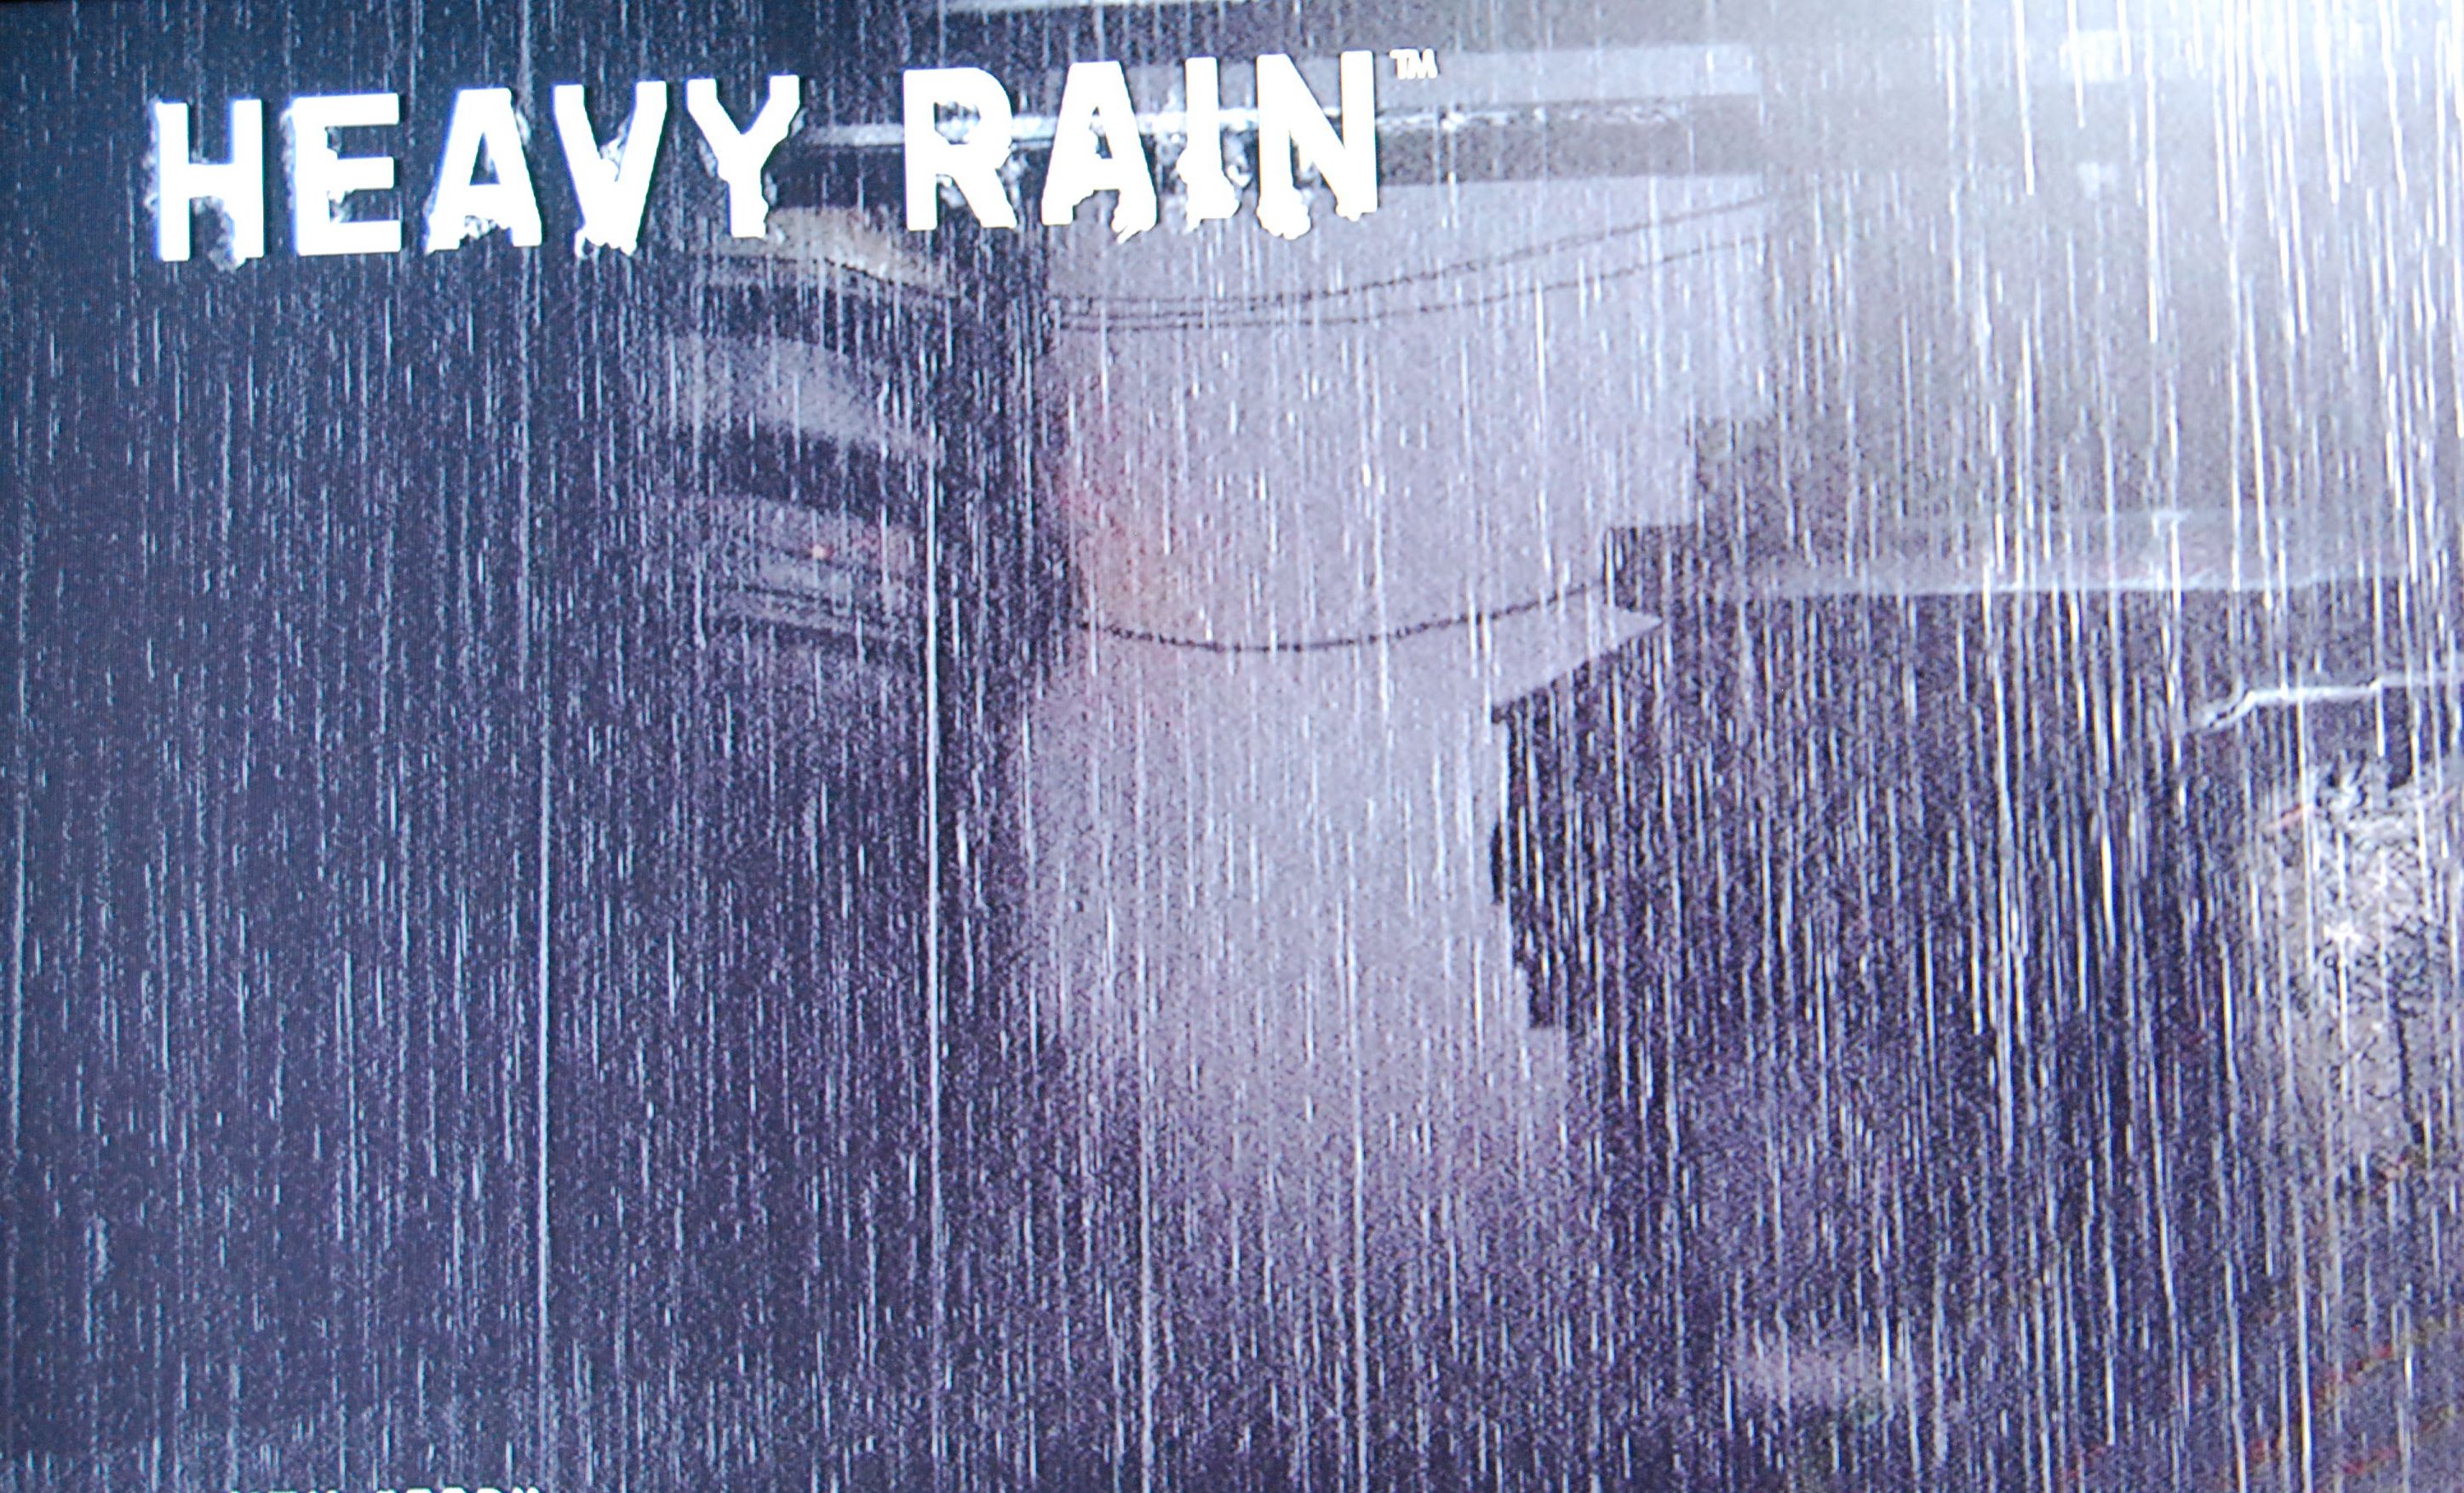 Heavy rain review â ps â capsule puters â gaming entertainment news reviews interviews petitions rain cross river rain wallpapers